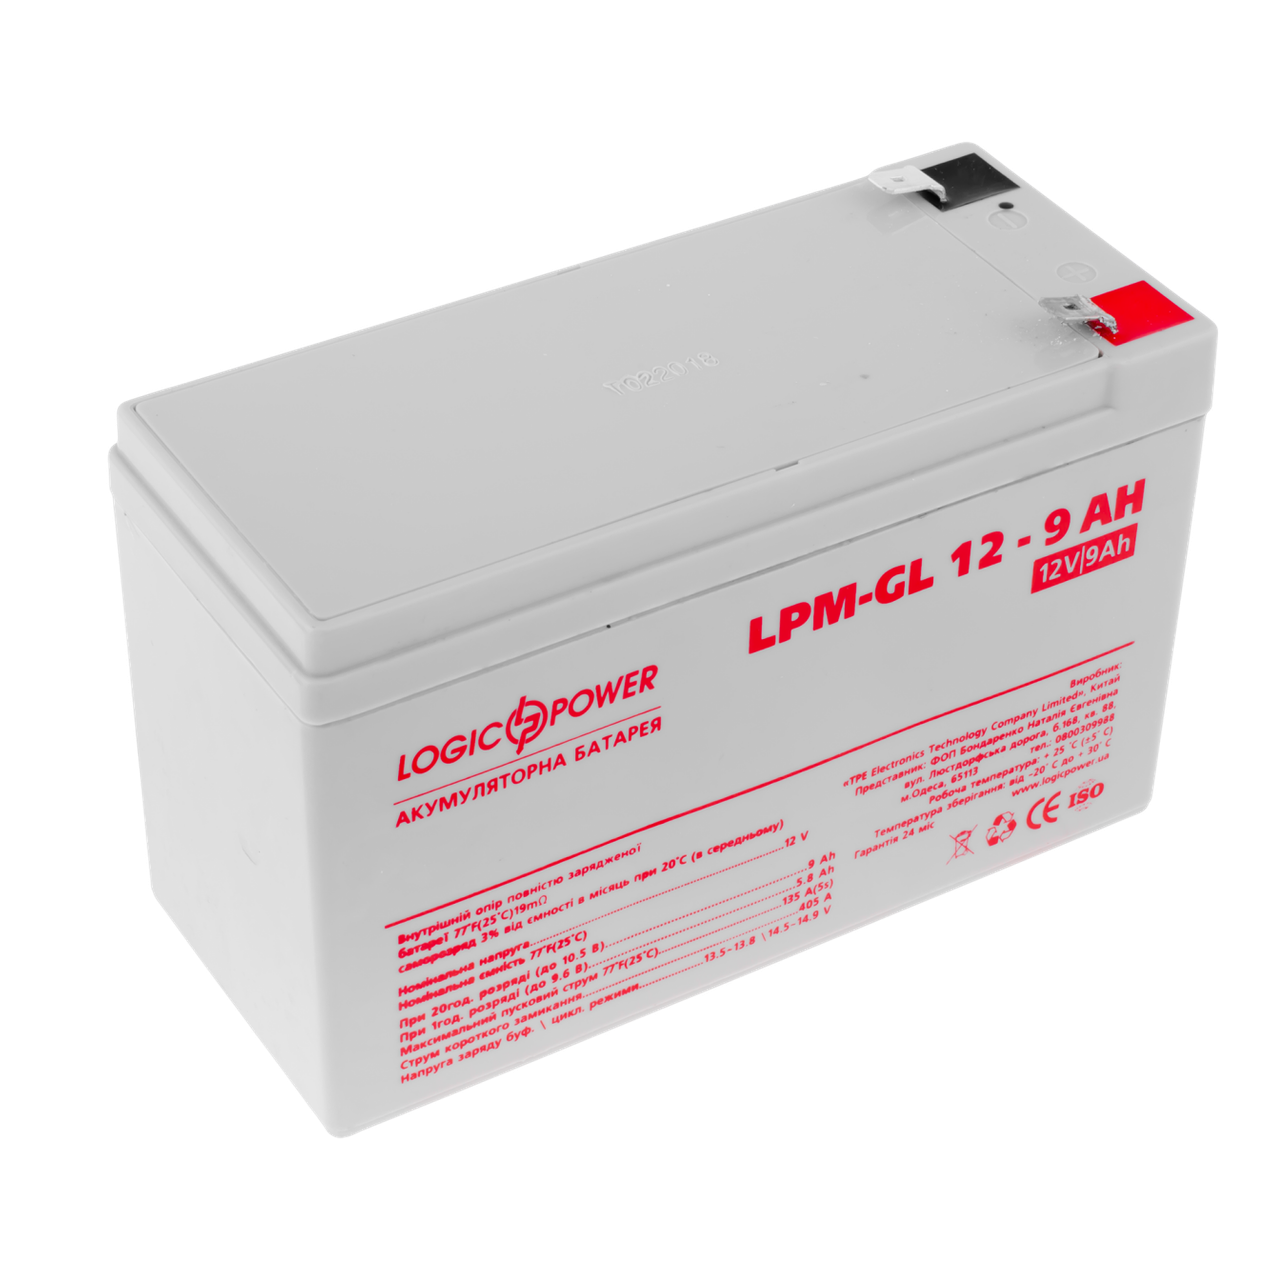 Акумулятор гелевий LogicPower 12 В 9 А·год (LPM-GL 12 - 9 AH)